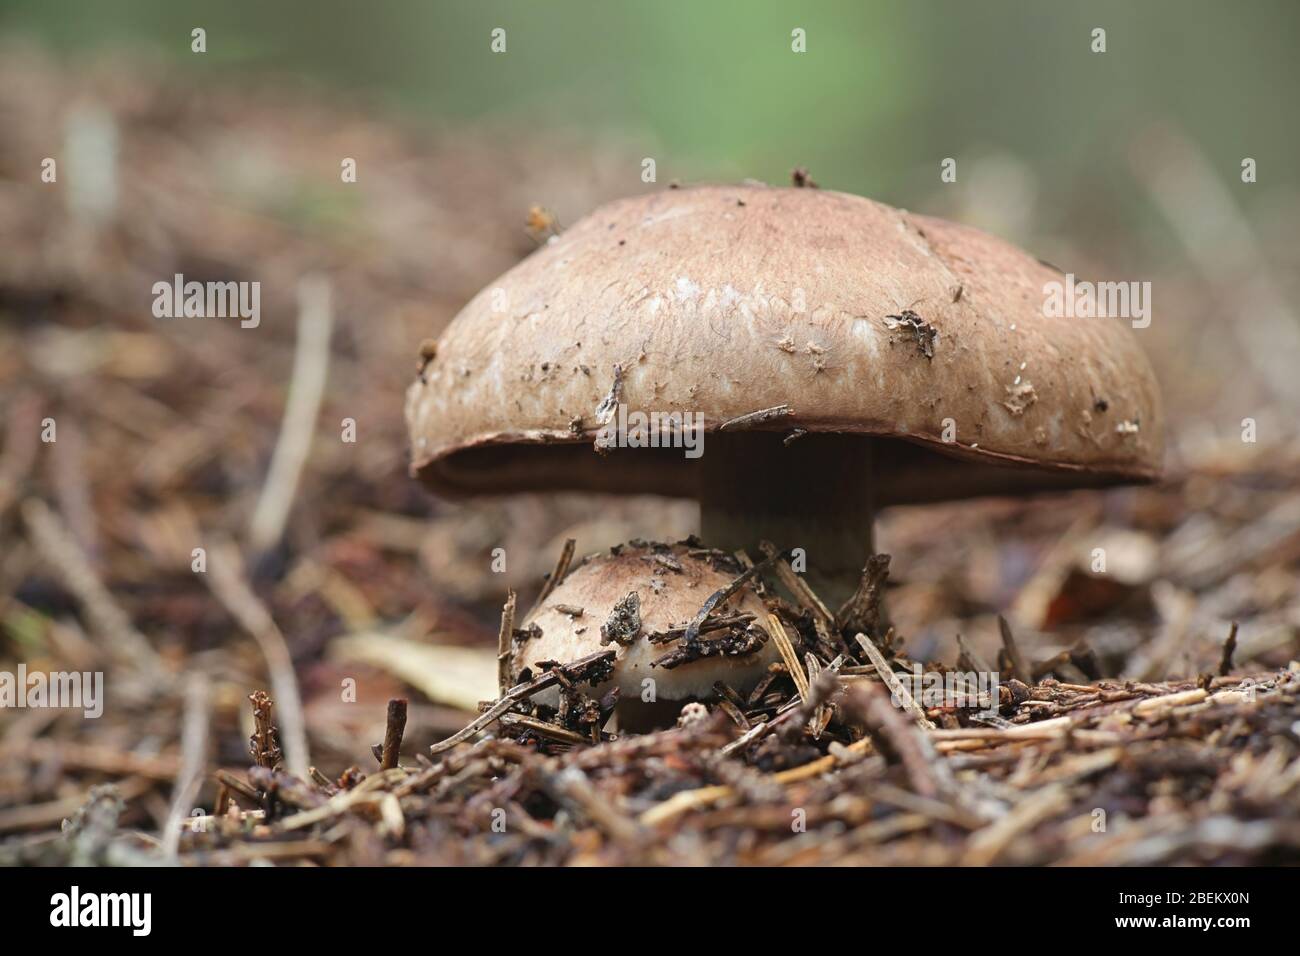 Agaricus silvaticus (Agaricus sylvaticus), known as the scaly wood mushroom, blushing wood mushroom, or pinewood mushroom Stock Photo